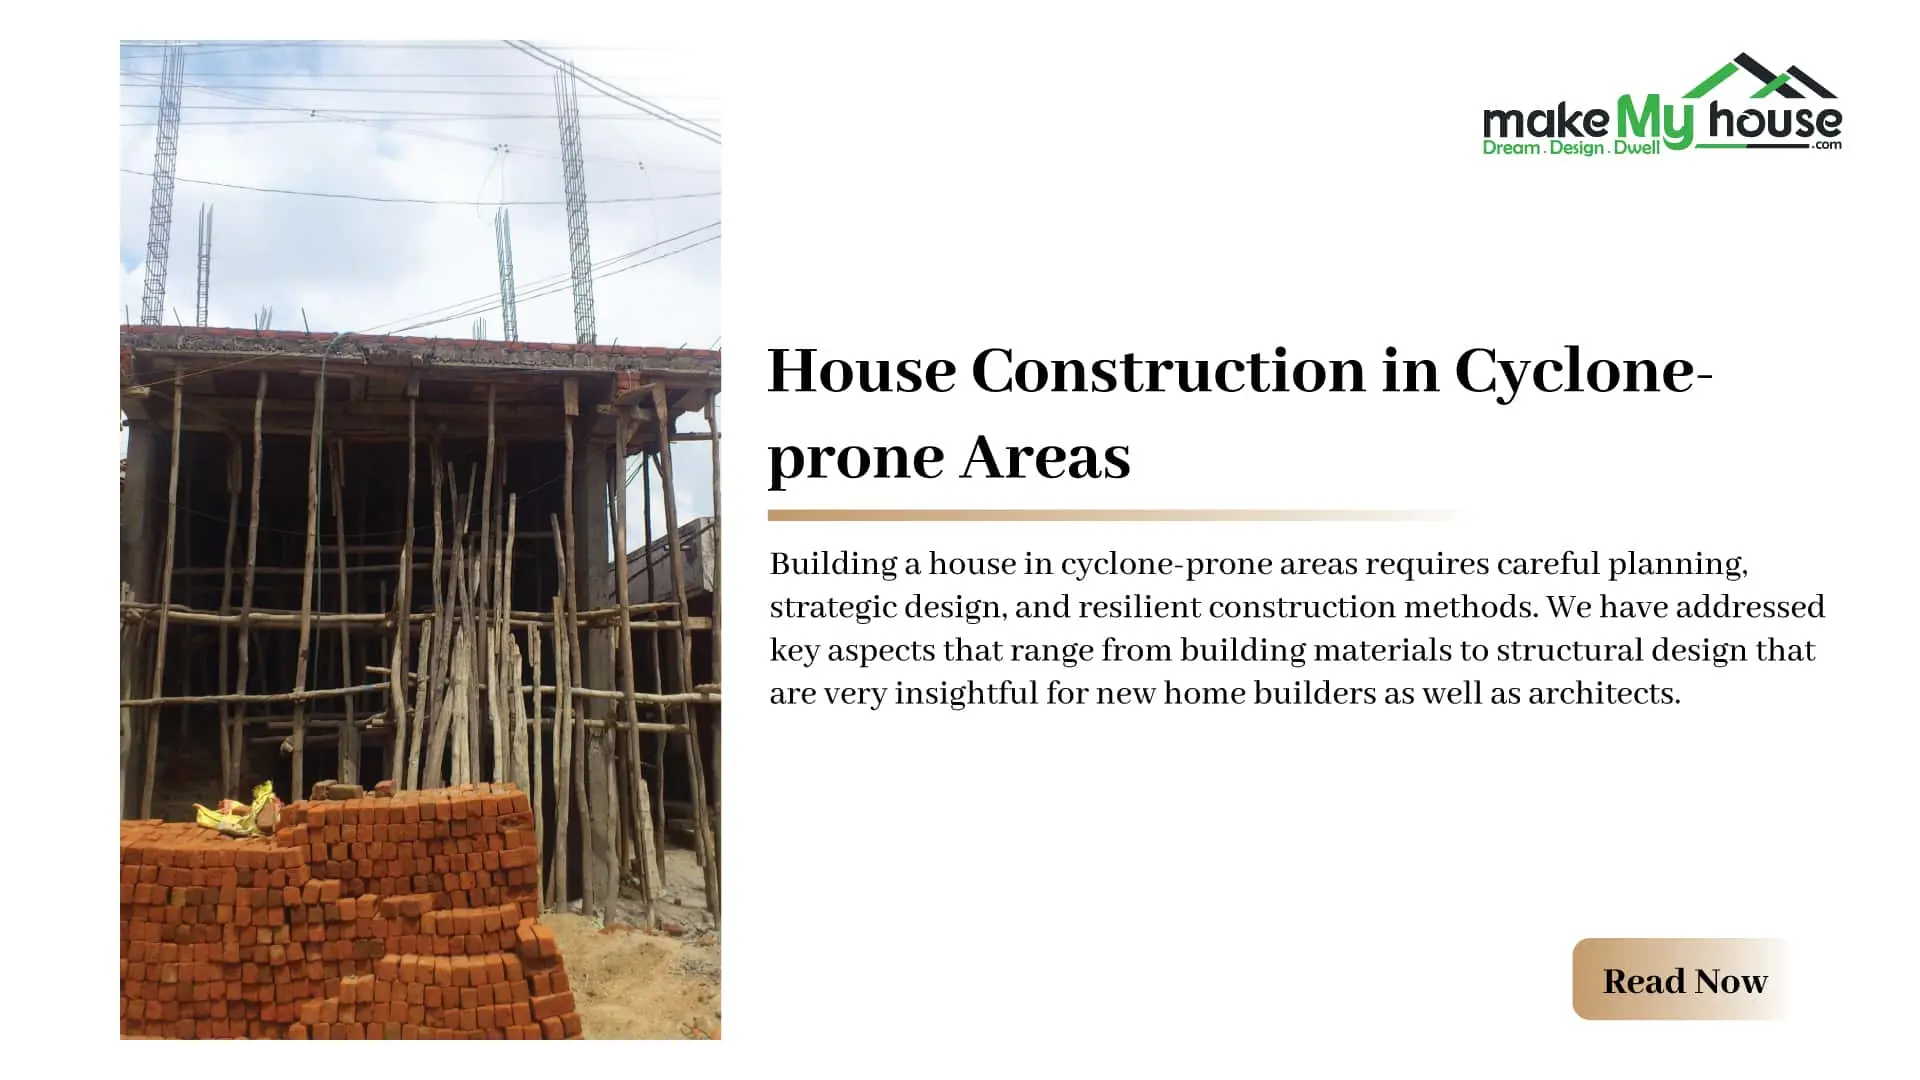 building a house